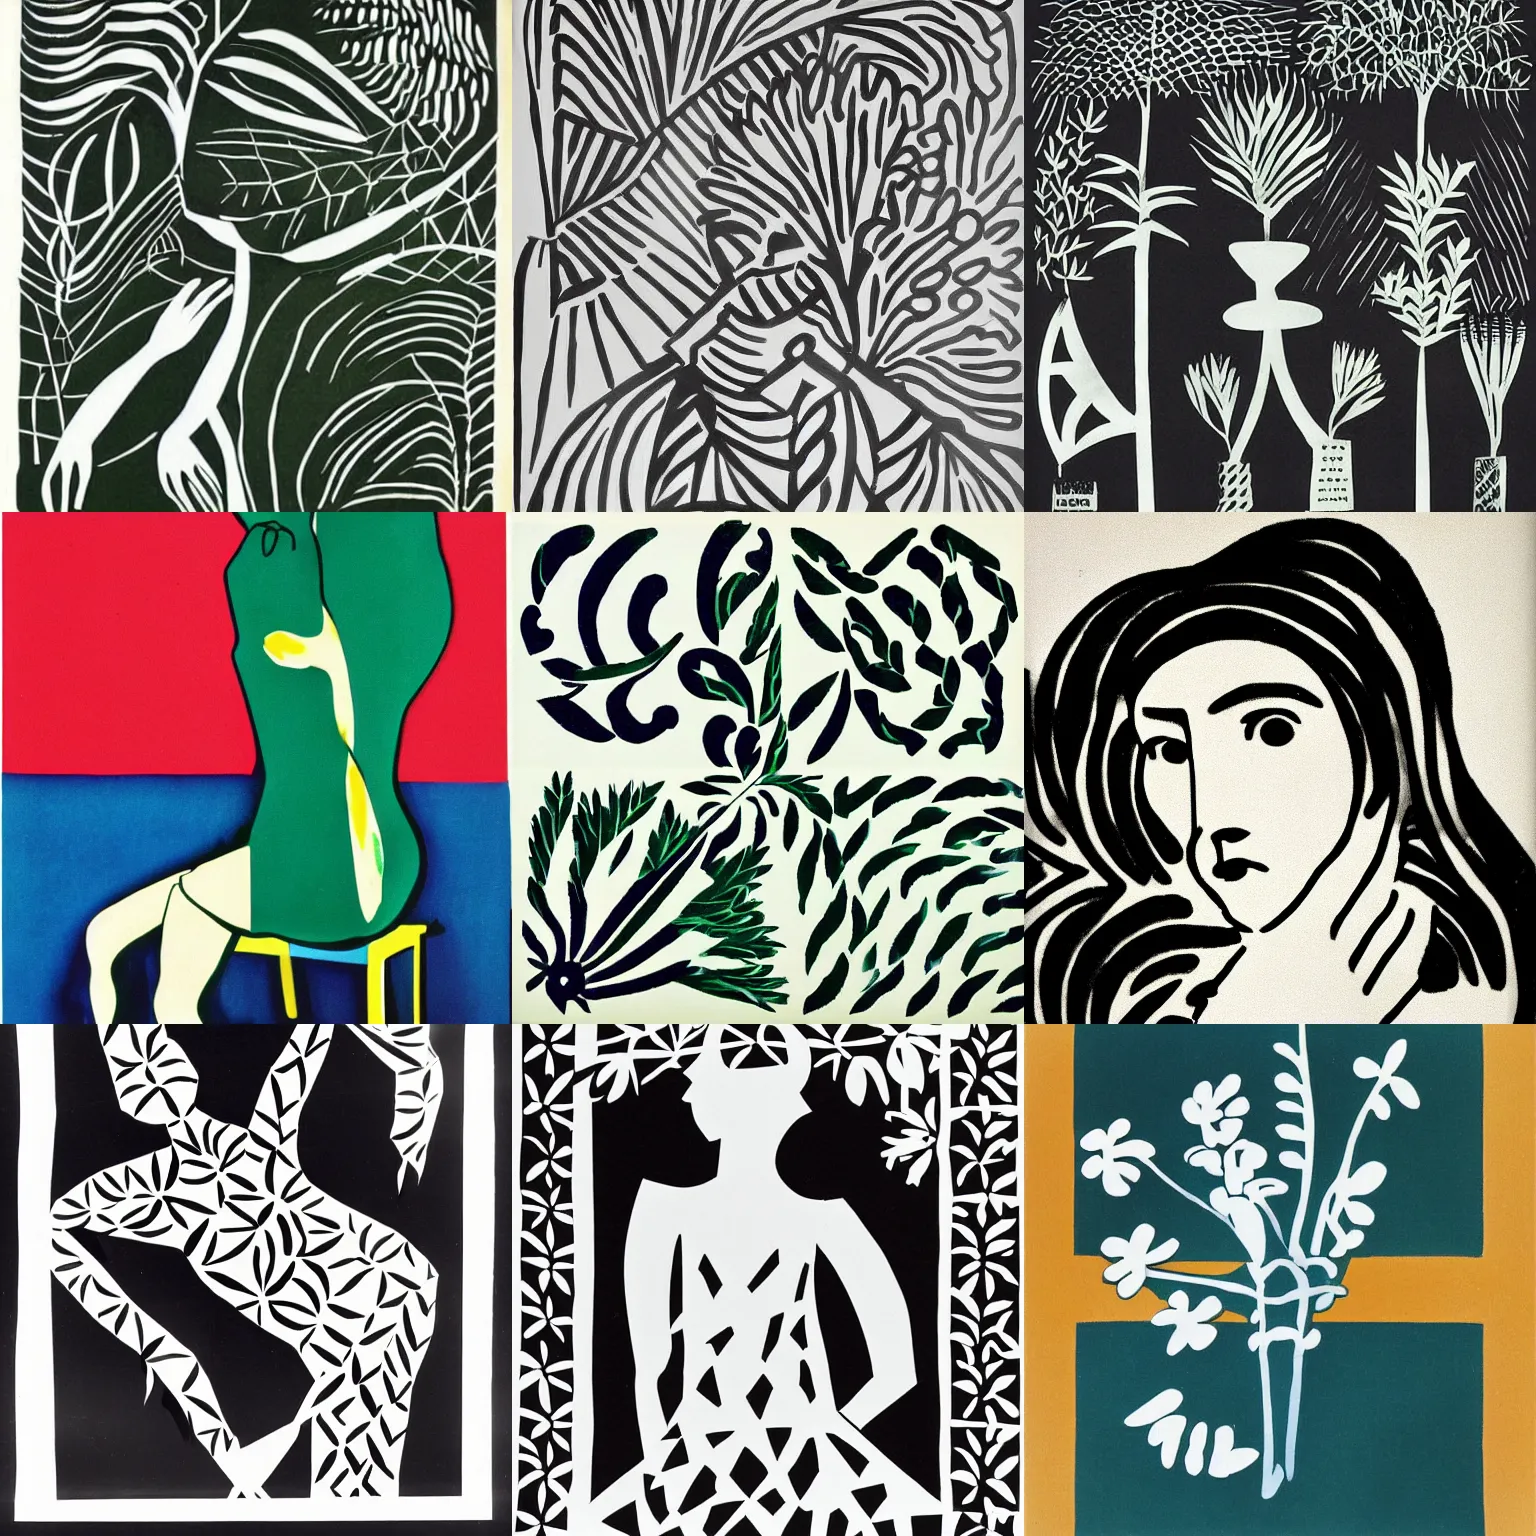 Why Did Henri Matisse Create Paper Cut-Outs?